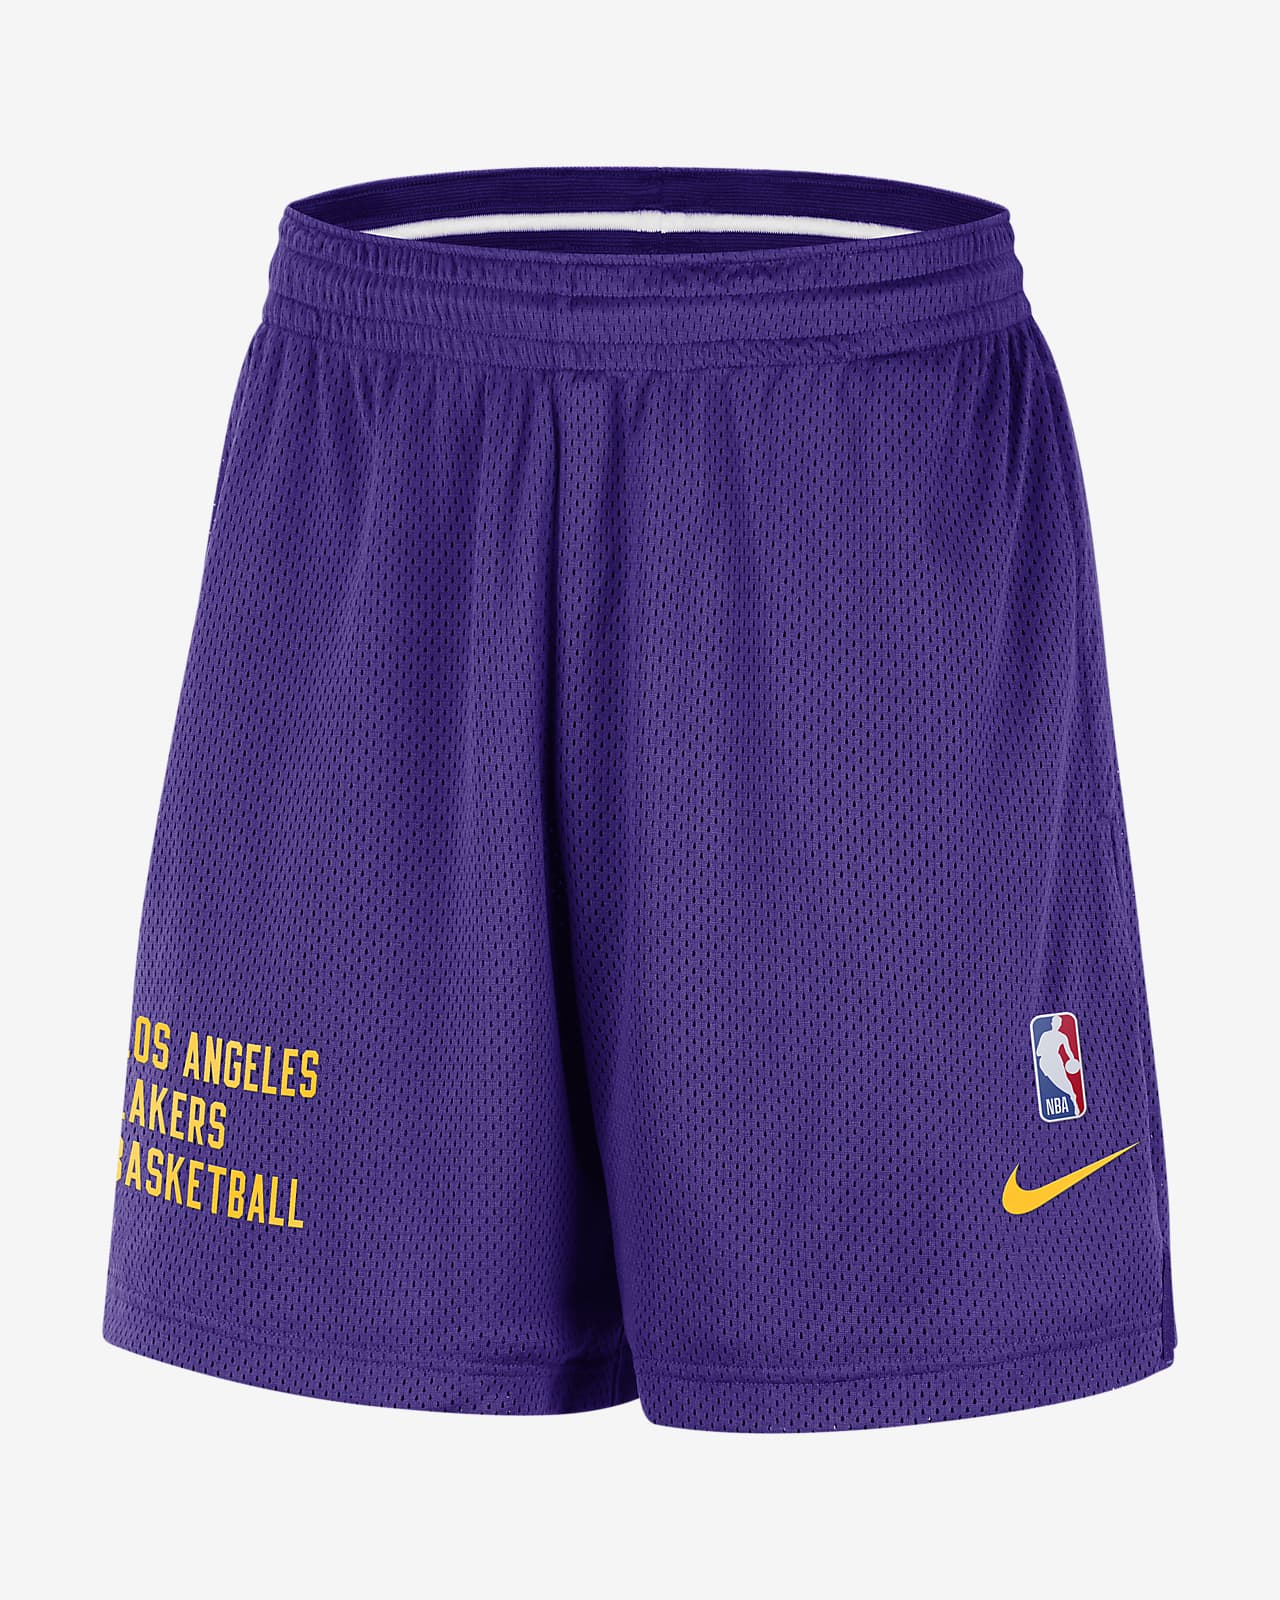 Shorts de malla Nike de la NBA para hombre Los Angeles Lakers